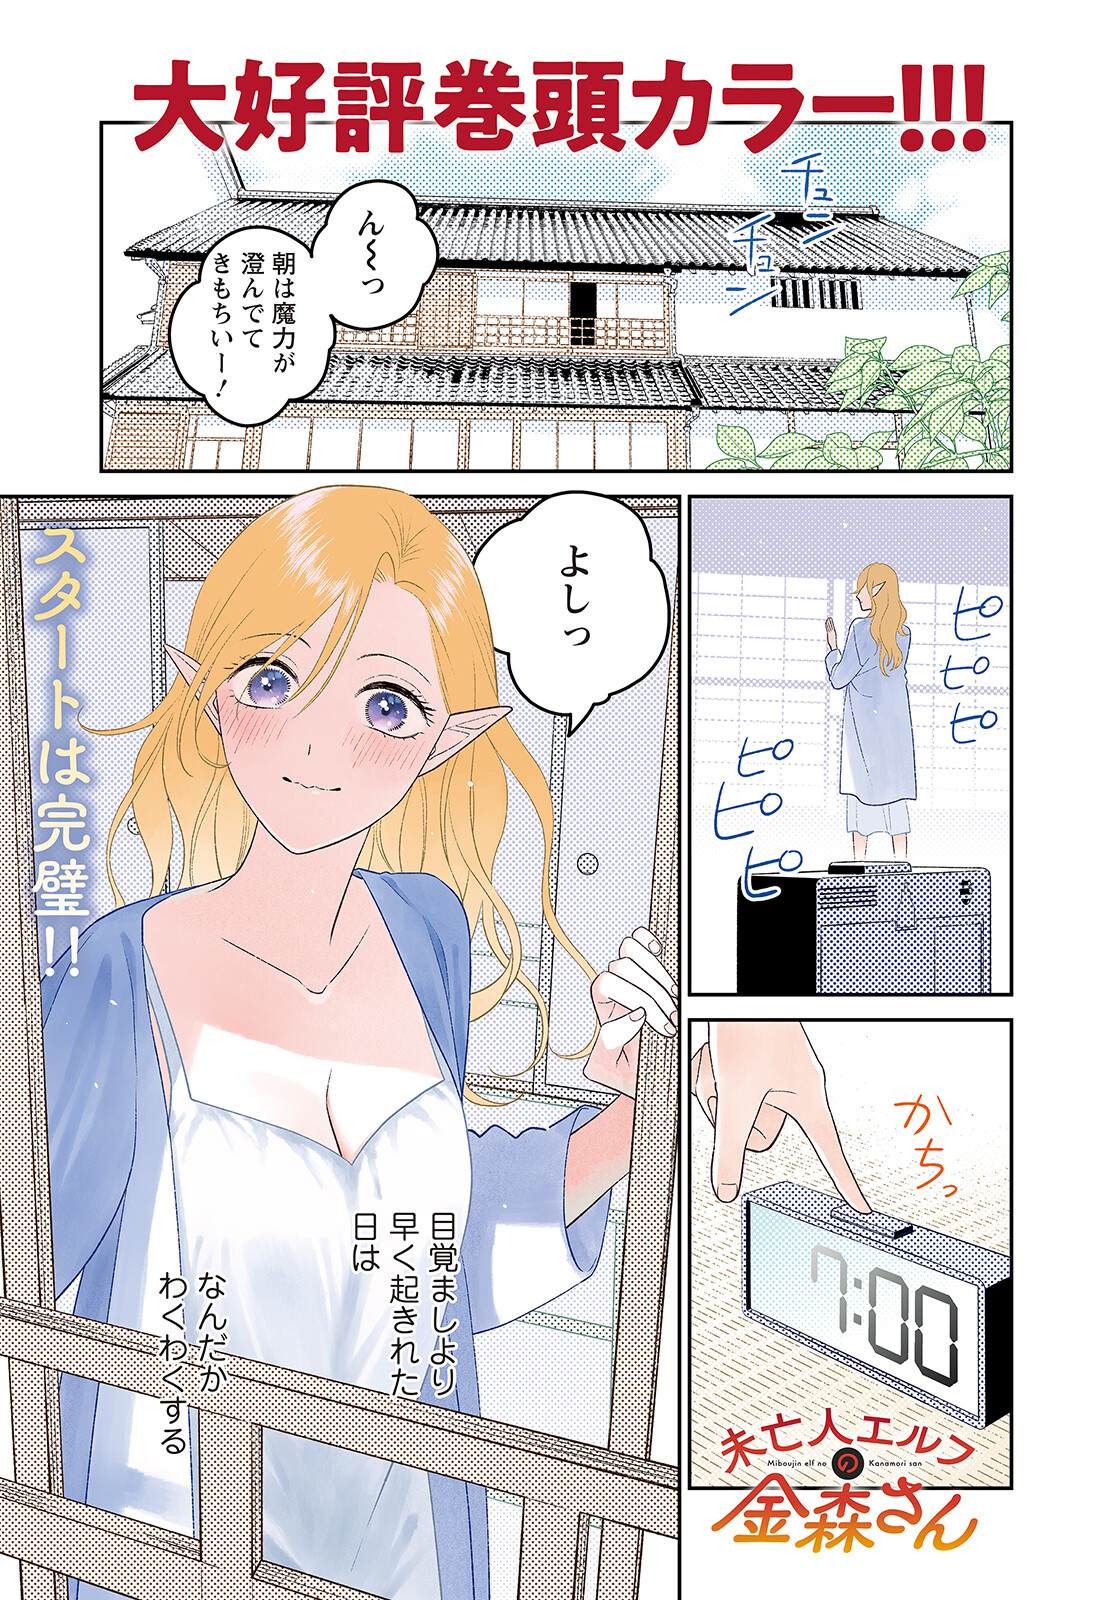 Miboujin Elf no Kanamori-san - Chapter 4 - Page 1